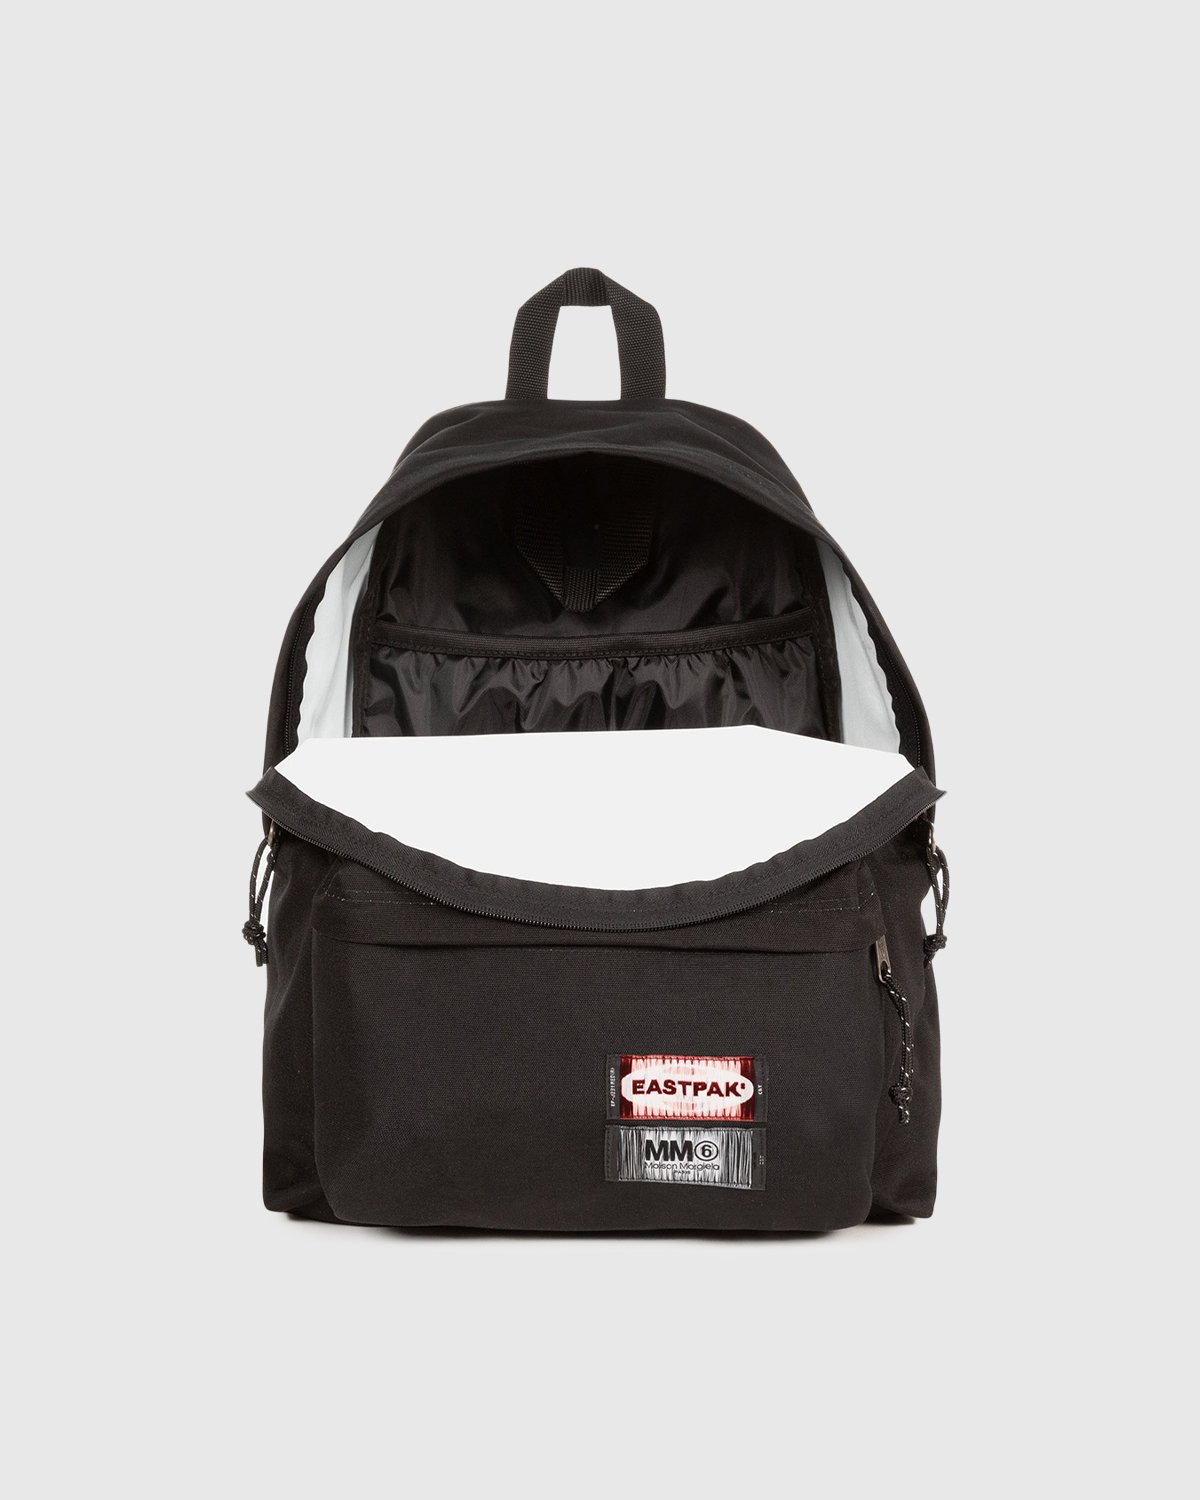 MM6 Maison Margiela x Eastpak - Padded Backpack Black - Accessories - Black - Image 3